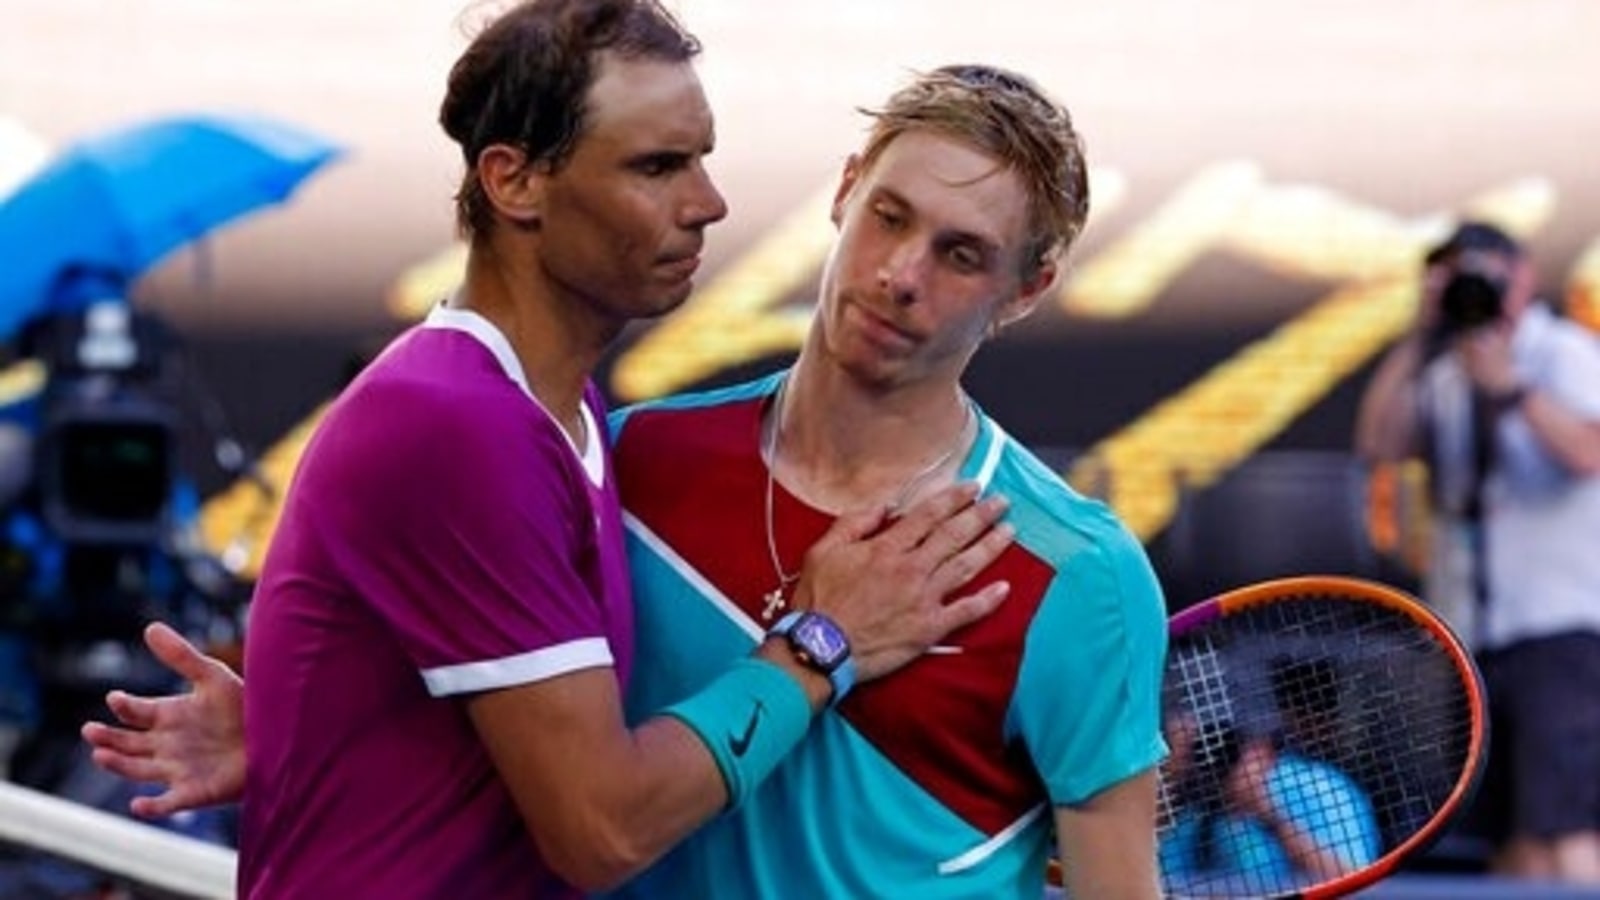 Denis Shapovalov claims Rafael Nadal gets preferential treatment from umpires Tennis News